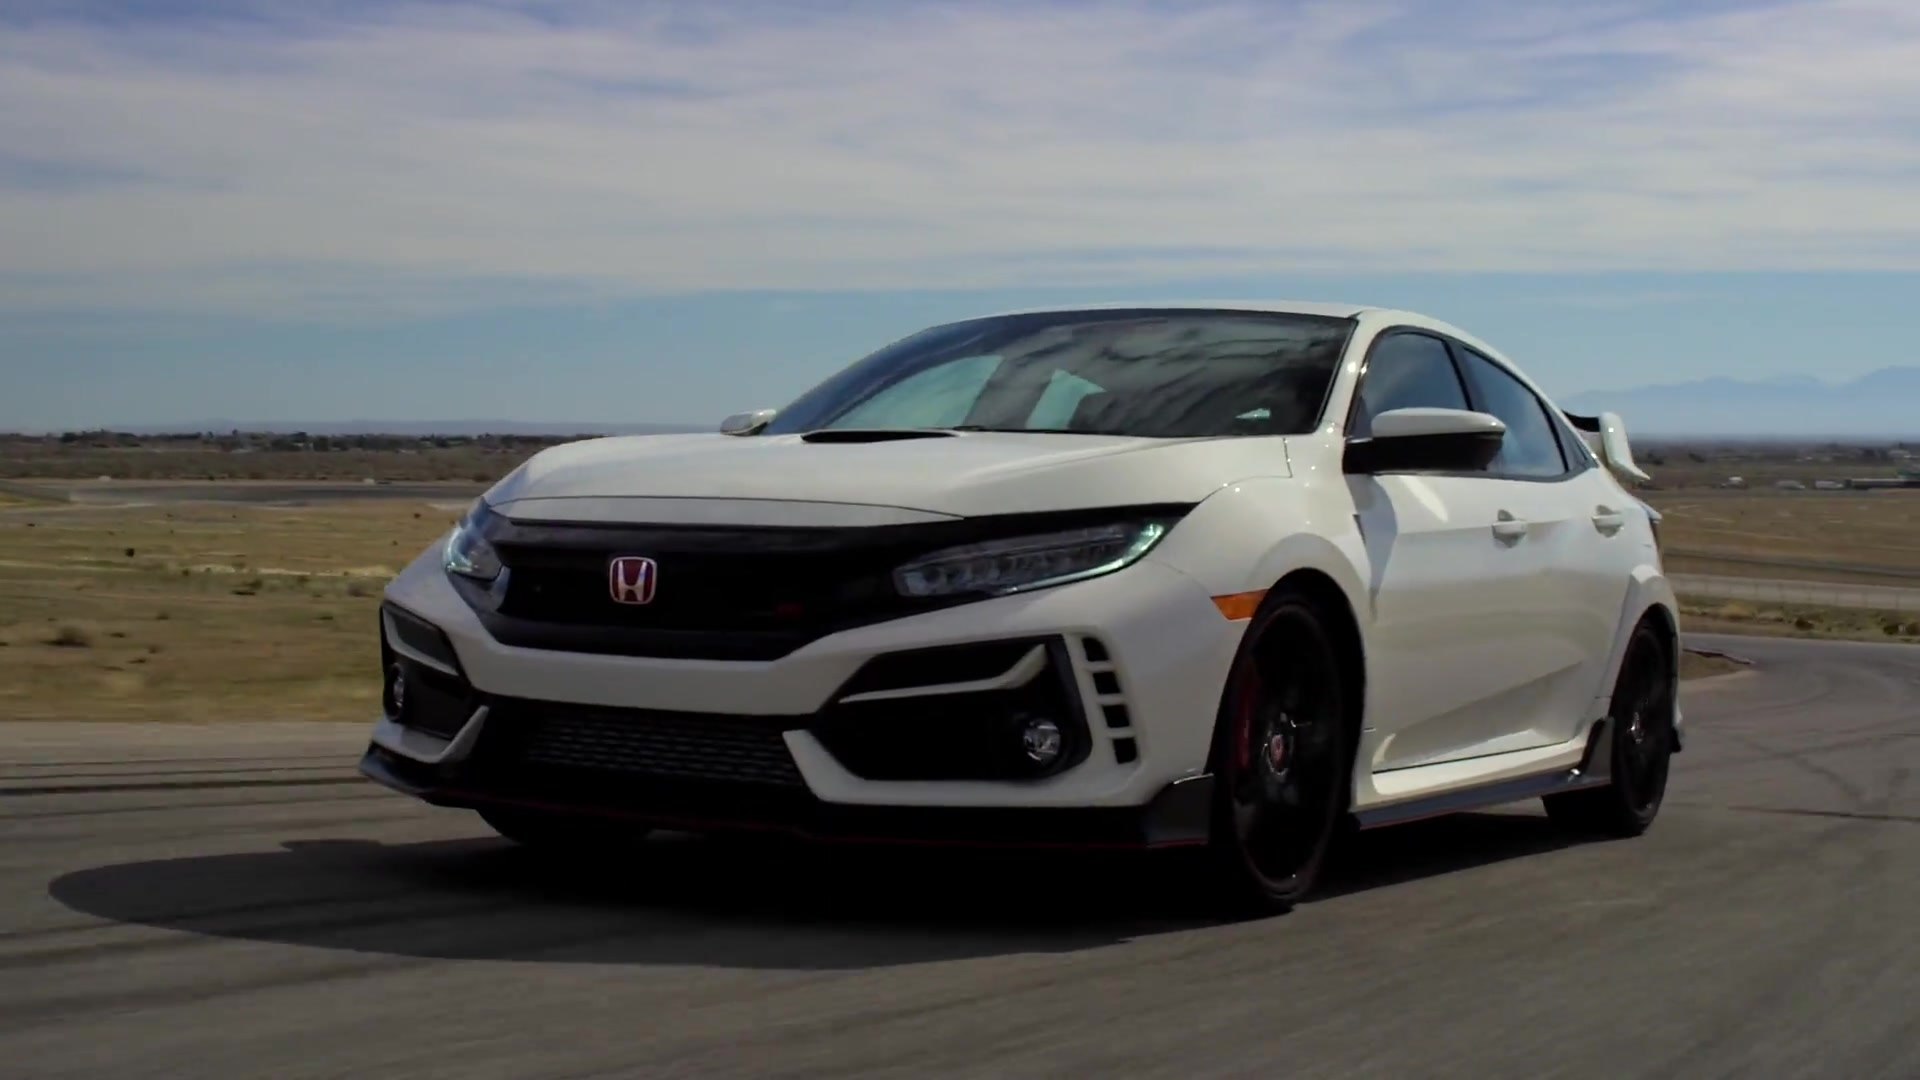 Honda Civic Type R Driving Video Video Dailymotion